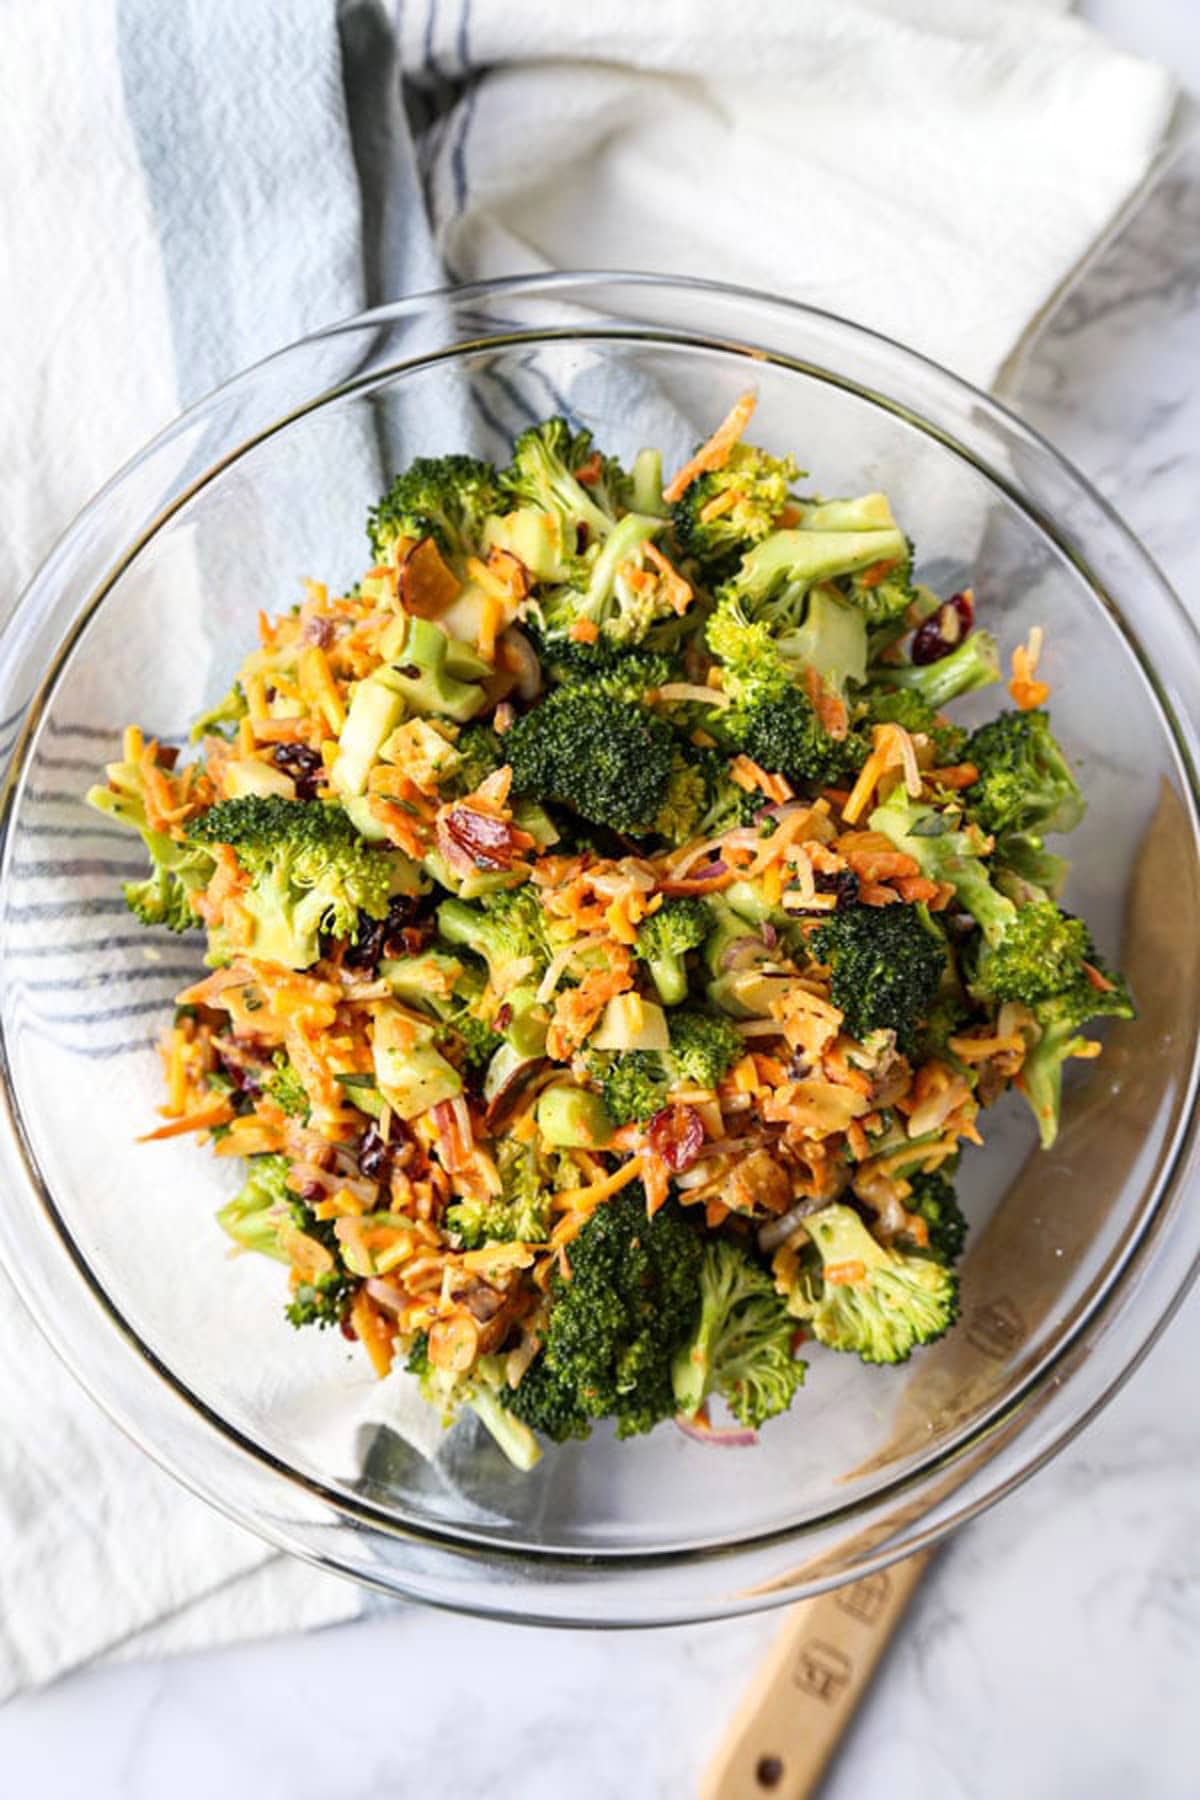 bbq sides - broccoli salad with honey mustard dressing 